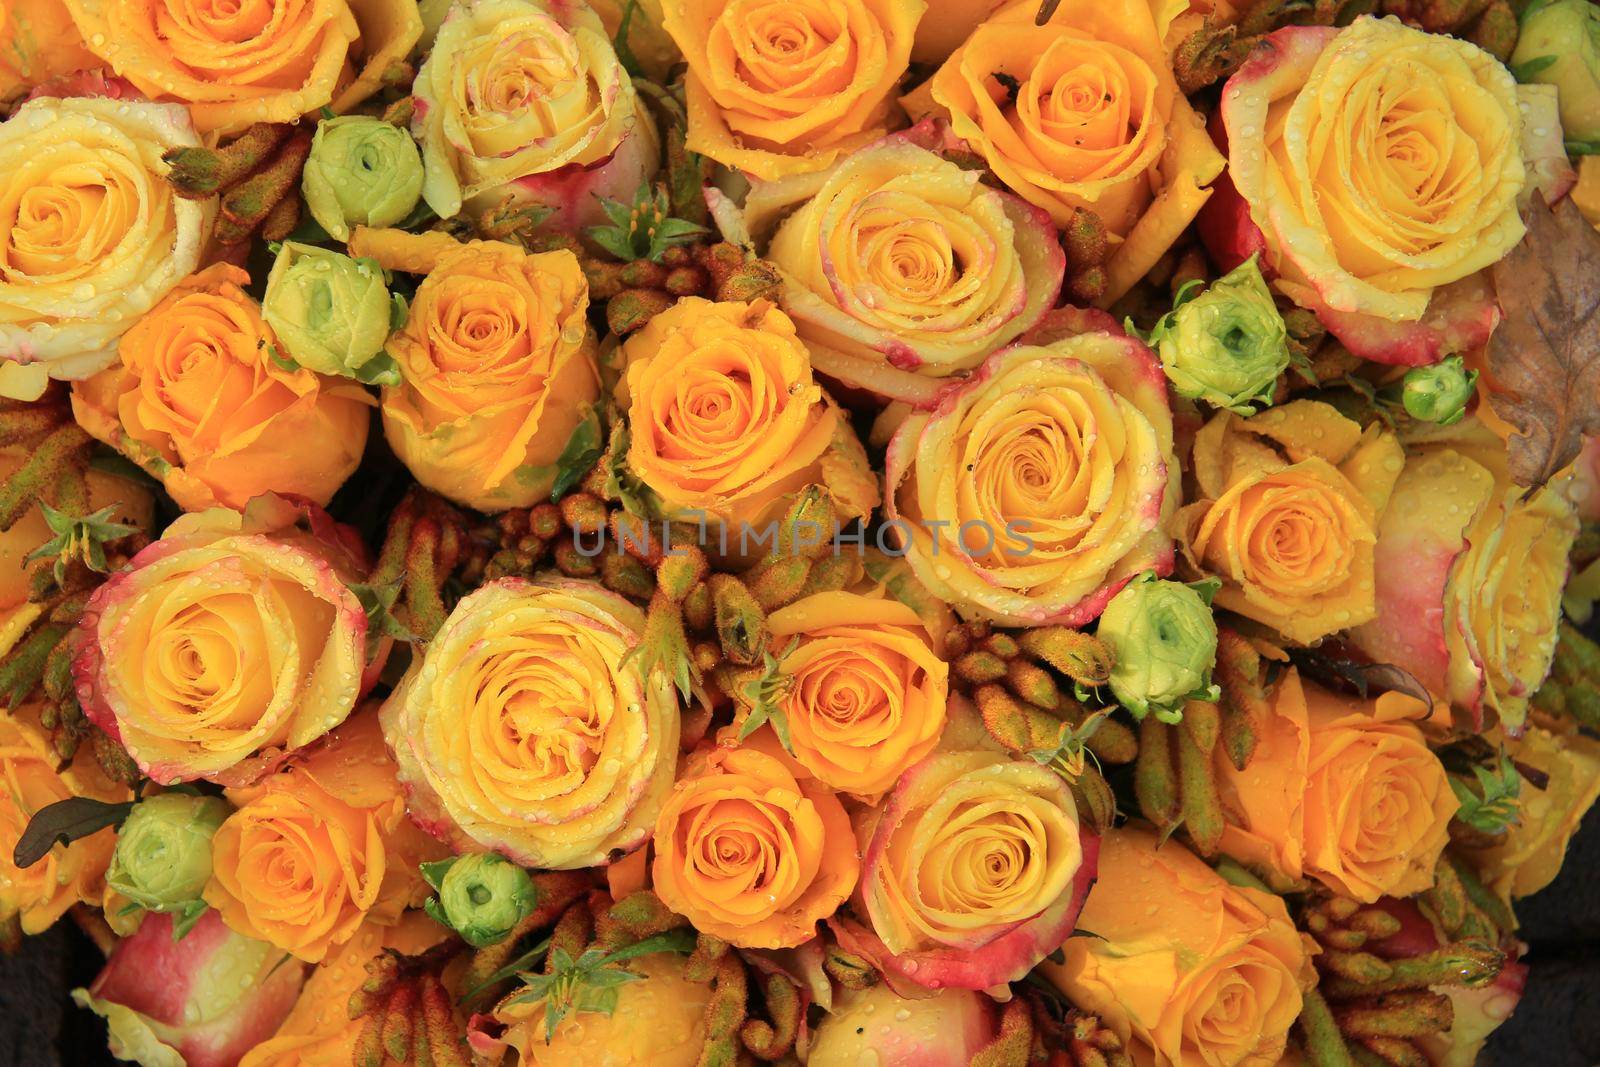 A yellow bridal floral arrangement for a wedding